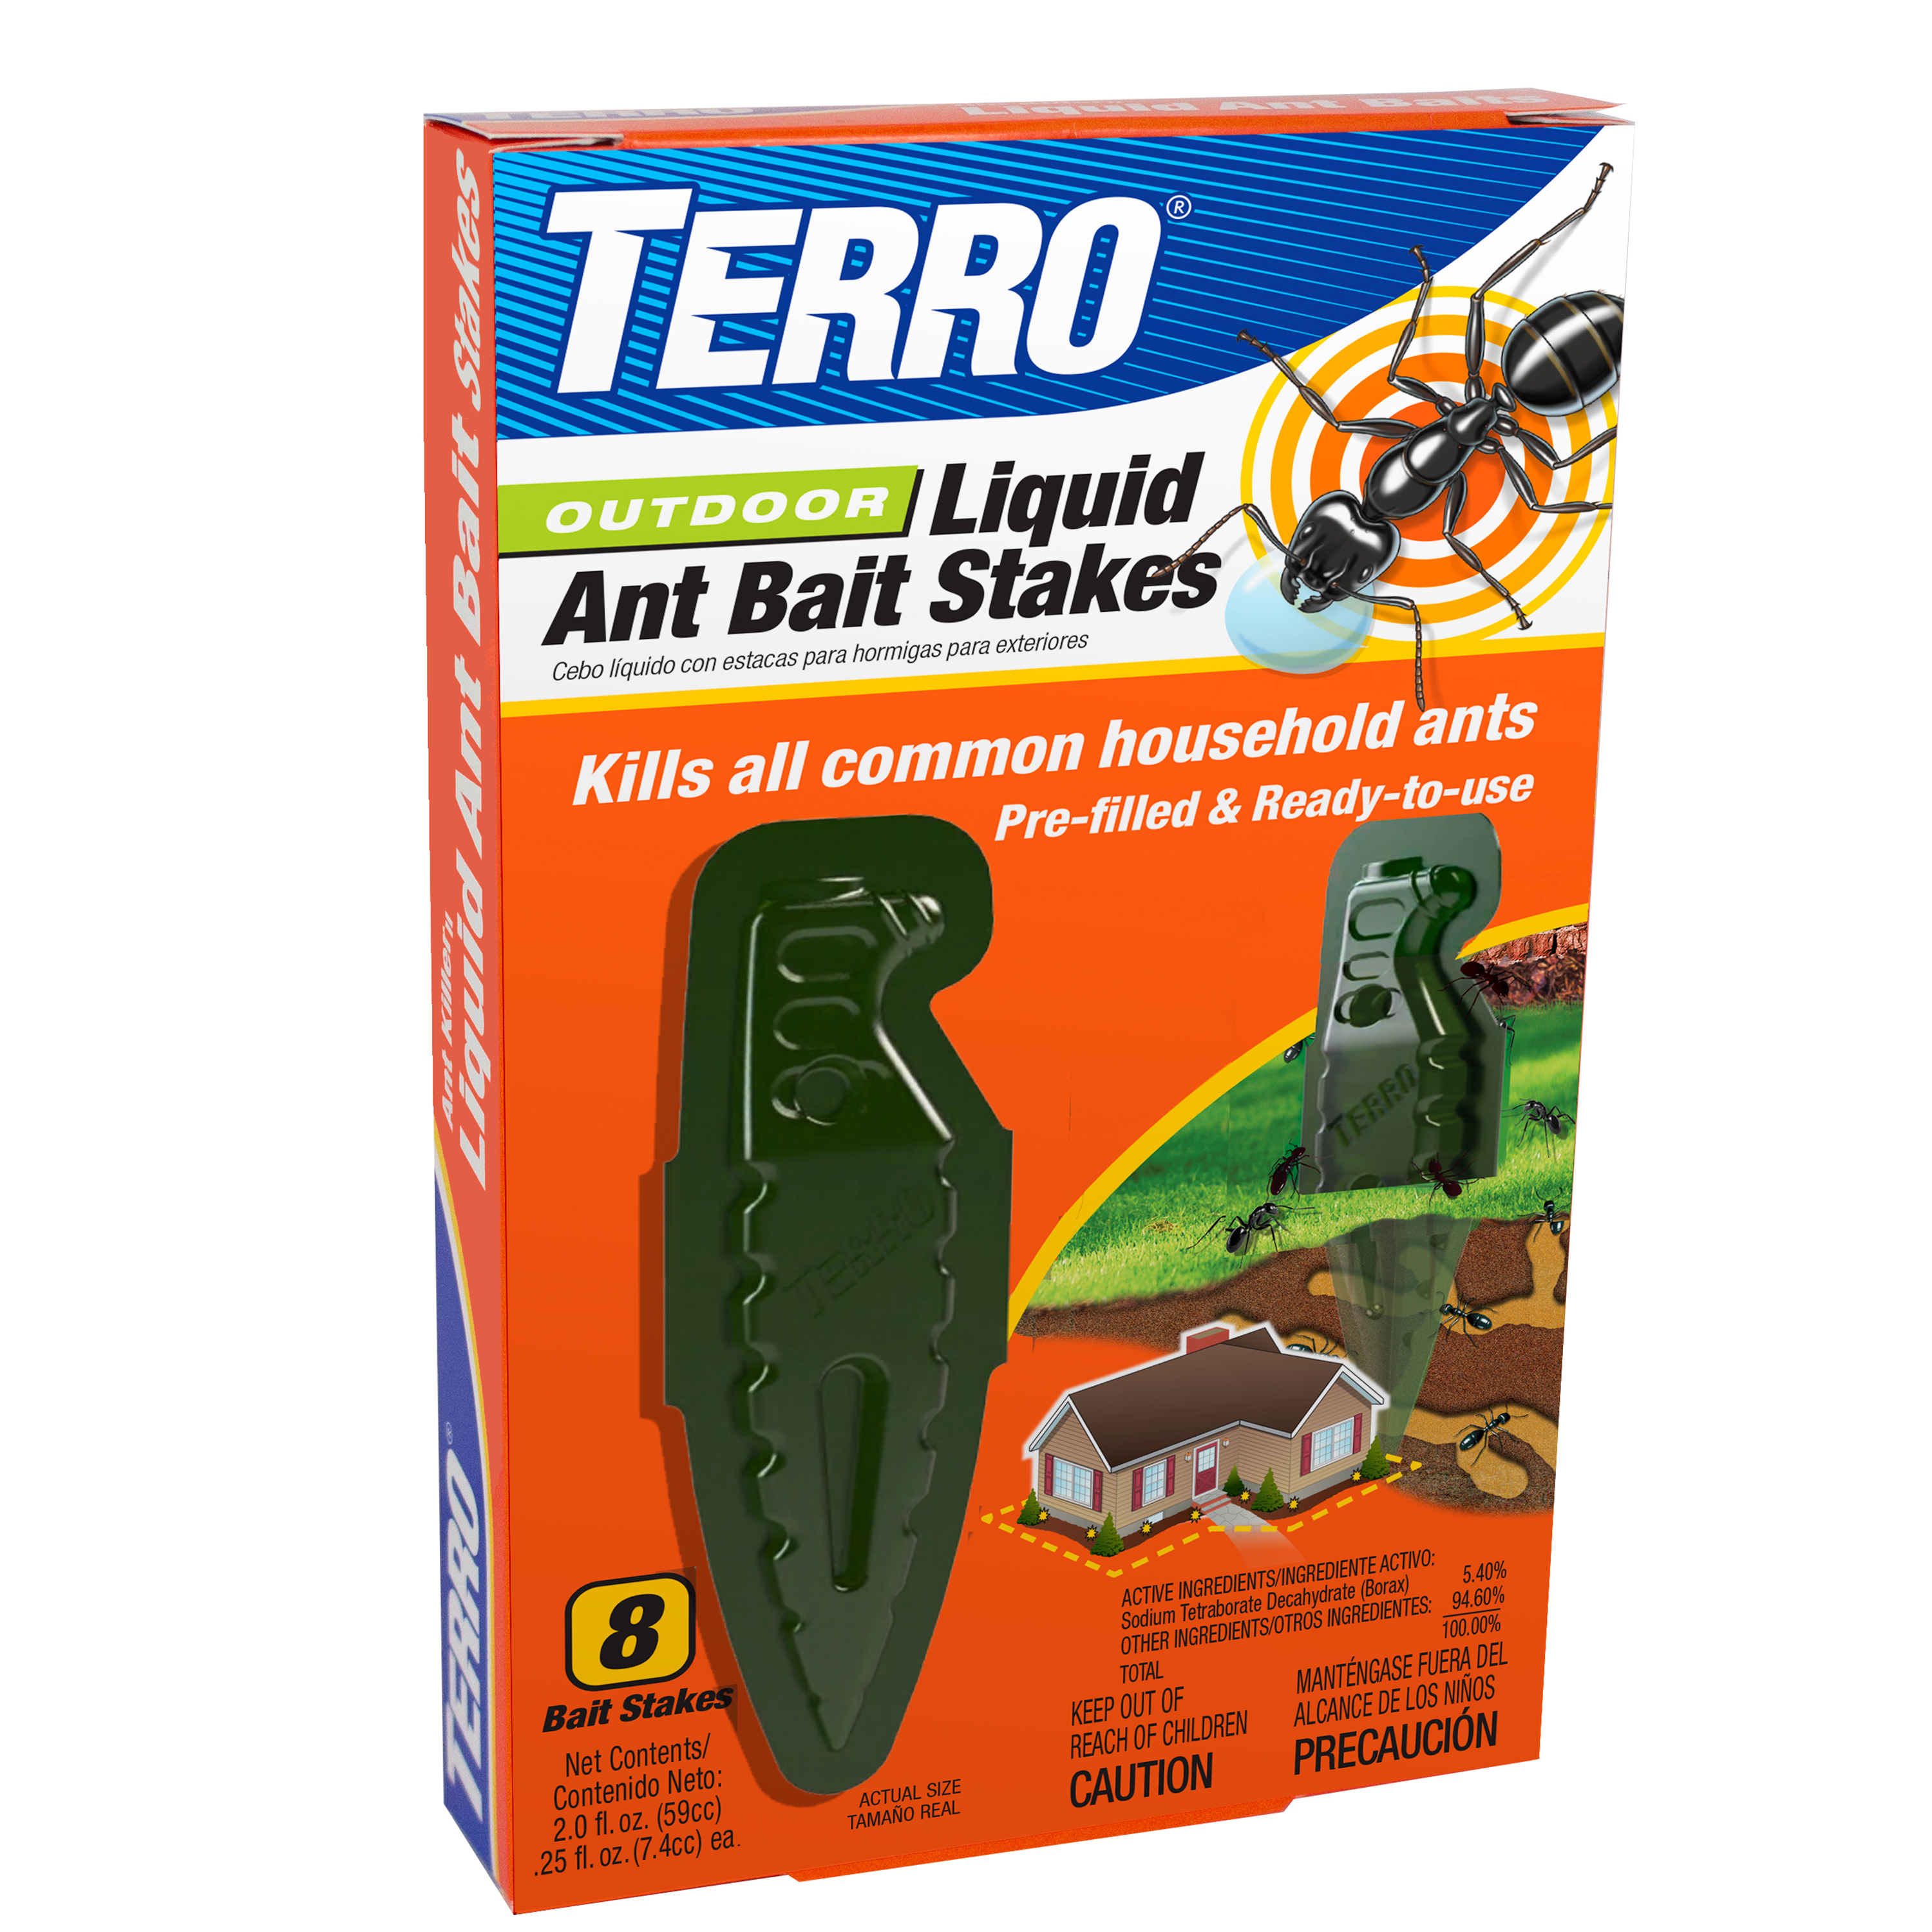 Terro Outdoor Liquid Ant Bait Stakes, 8ct - image 1 of 9